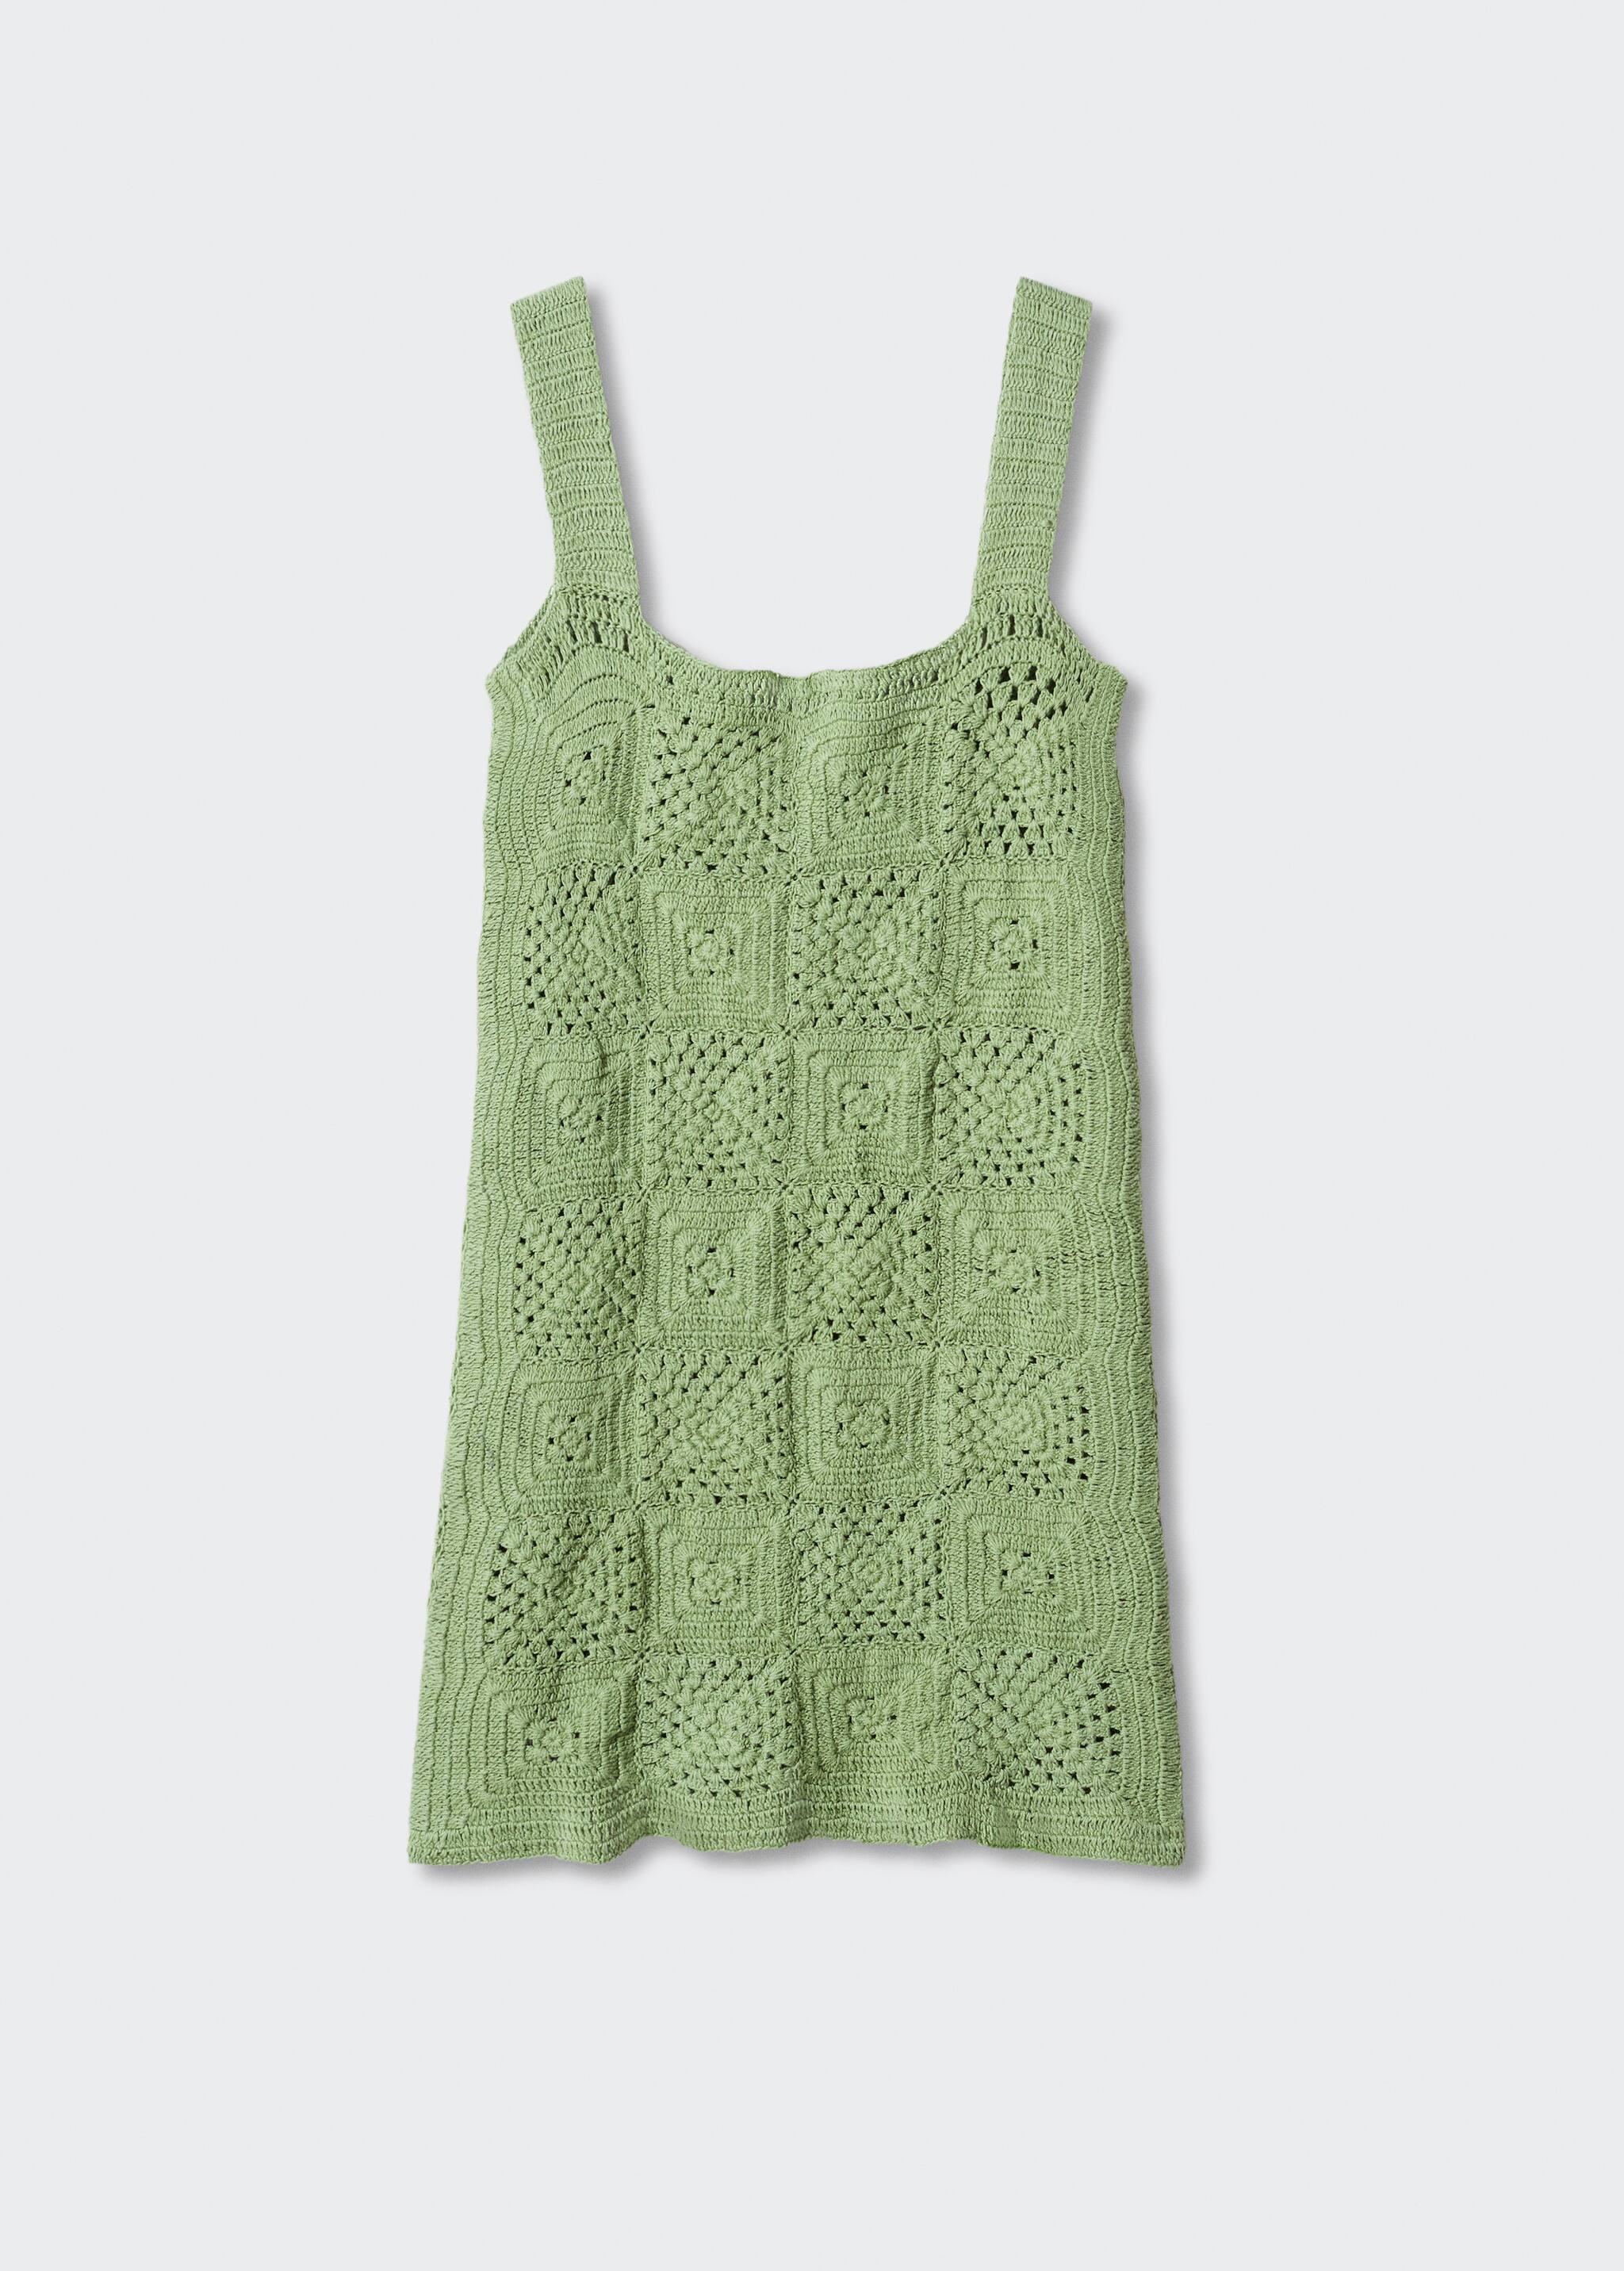 Crochet cotton dress - Article without model